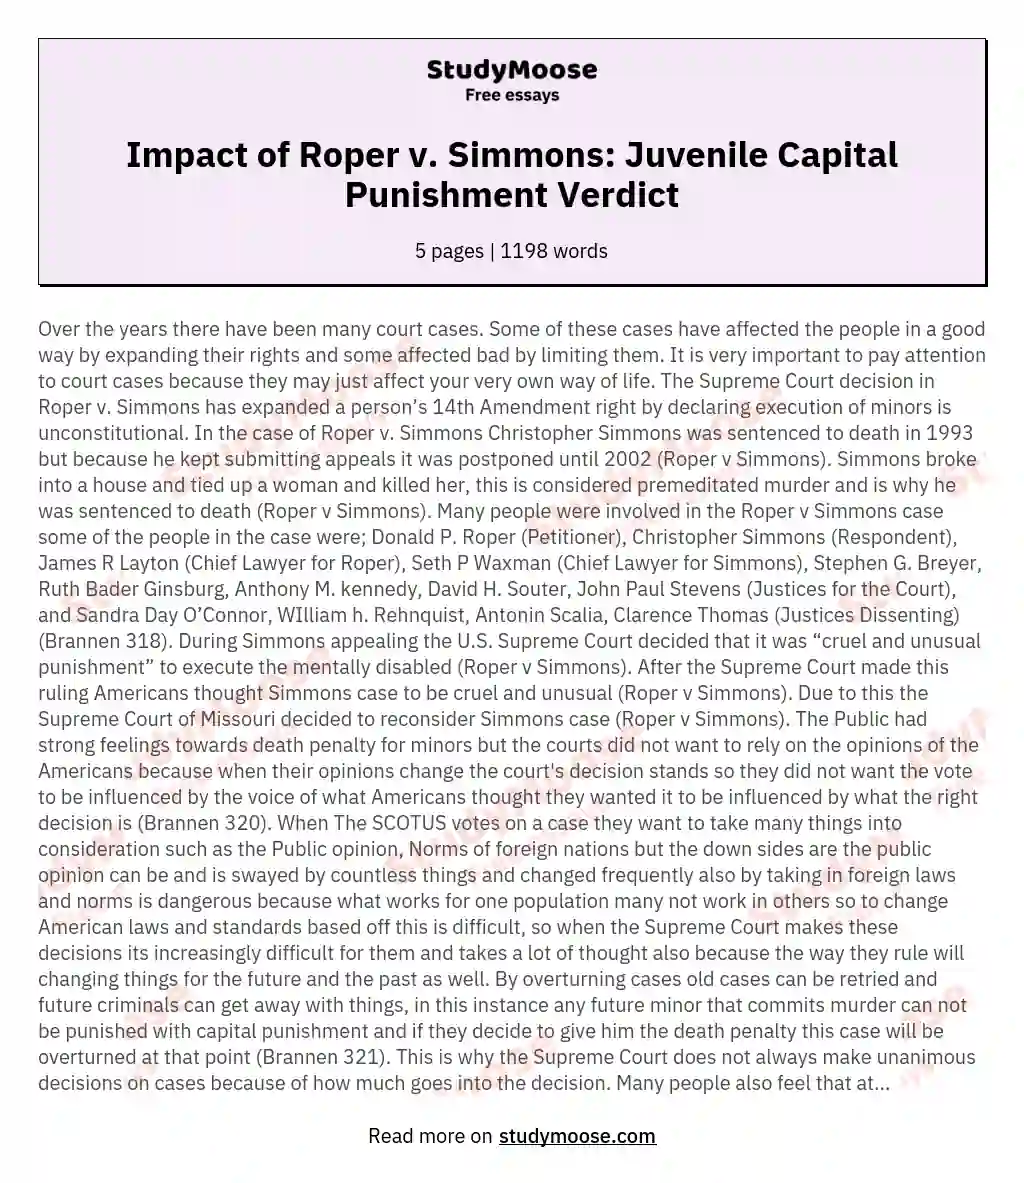 Impact of Roper v. Simmons: Juvenile Capital Punishment Verdict essay